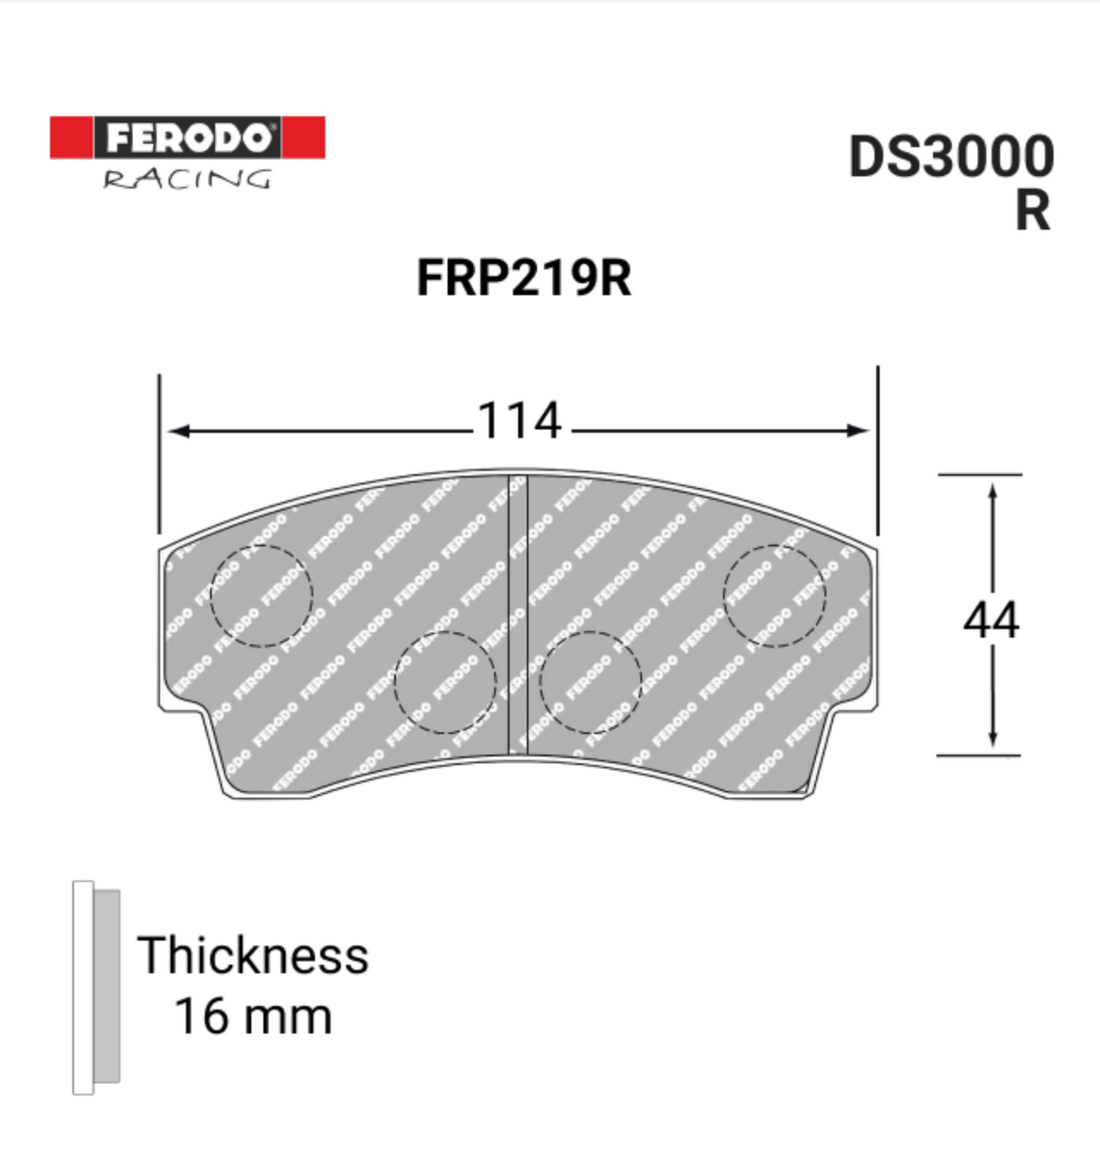 ferodo frp219r ds3000 brake pads